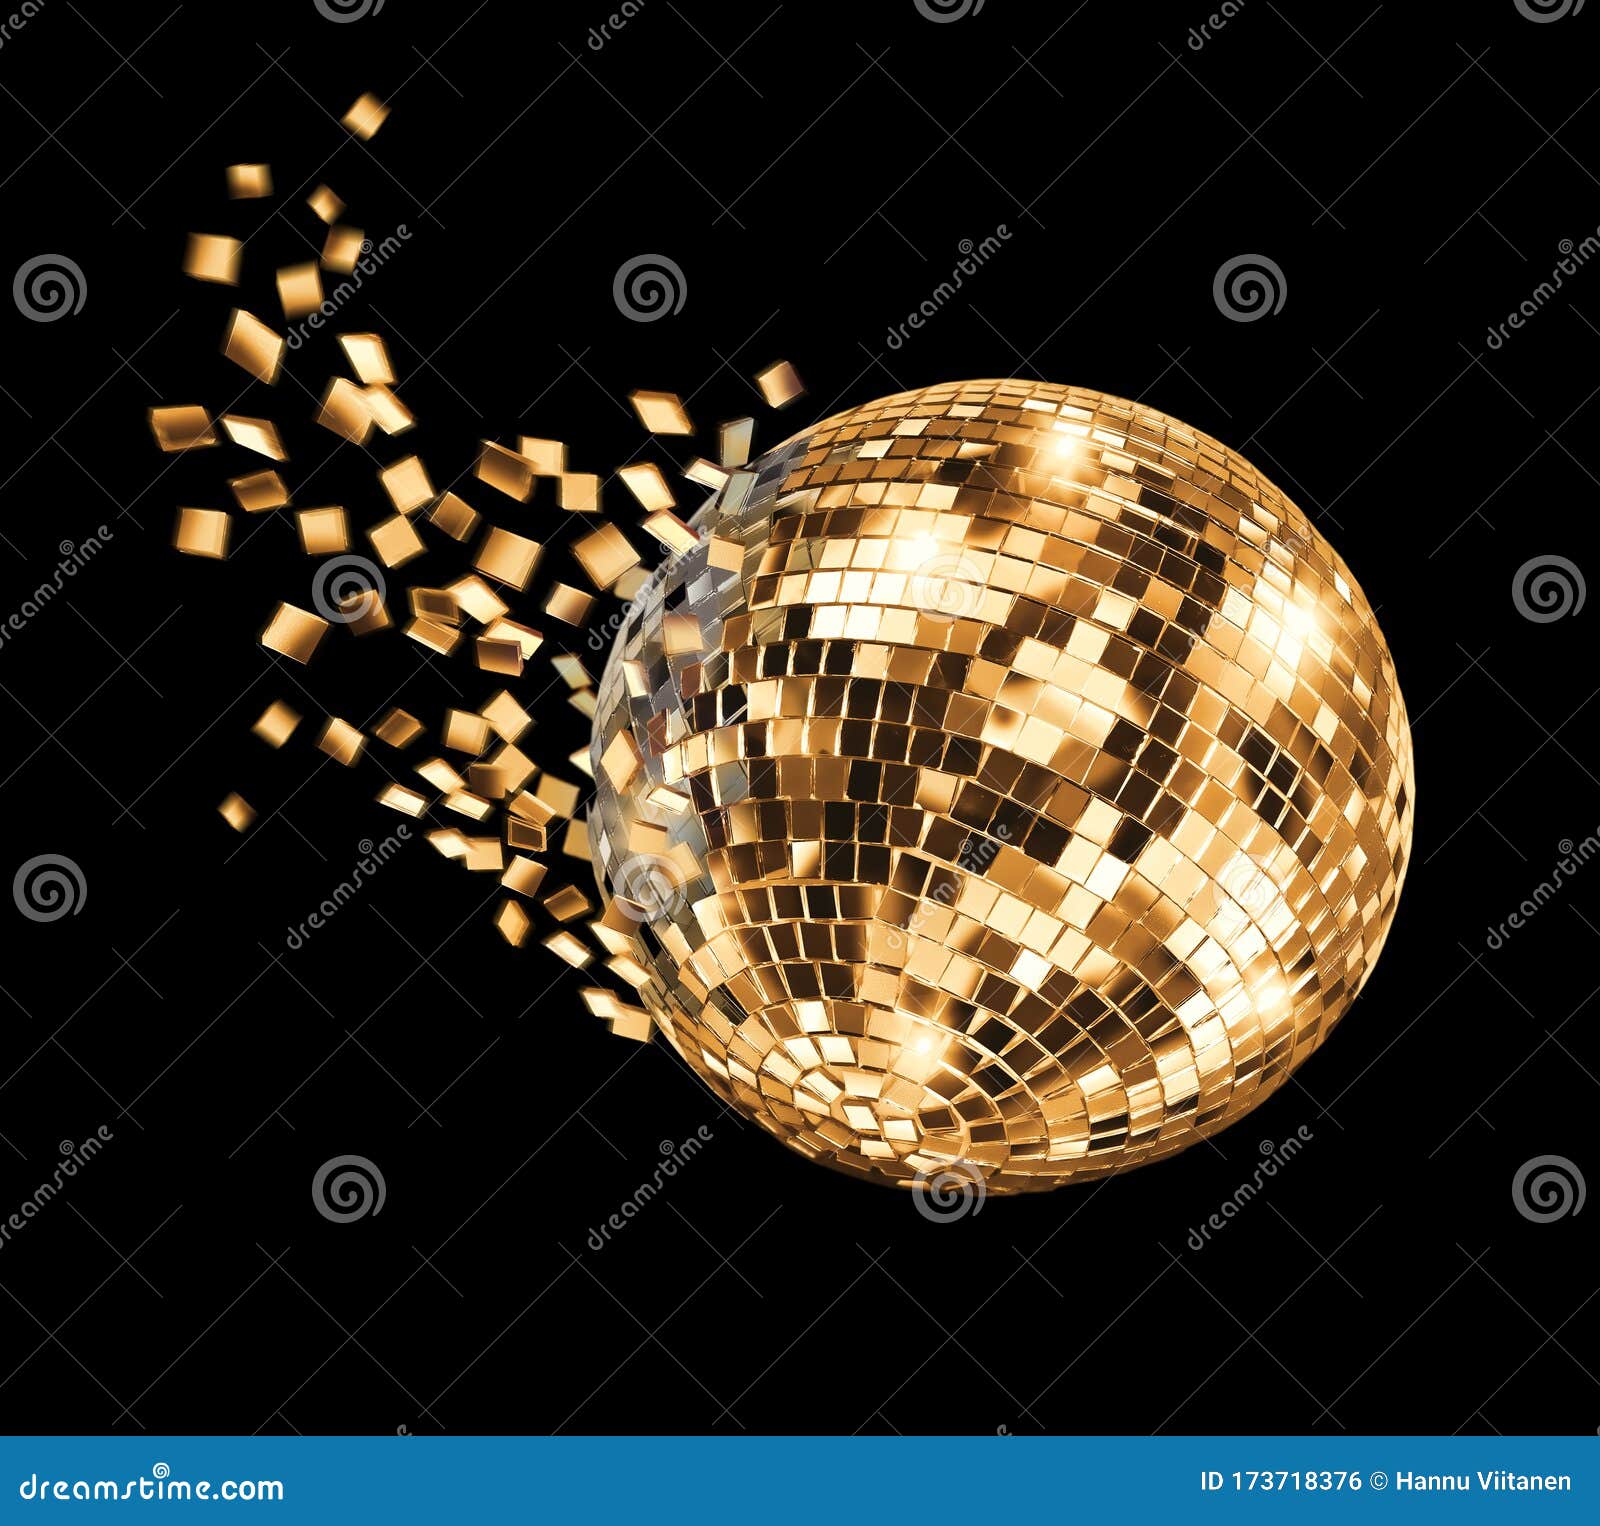 golden disco mirror ball breaking into fragments